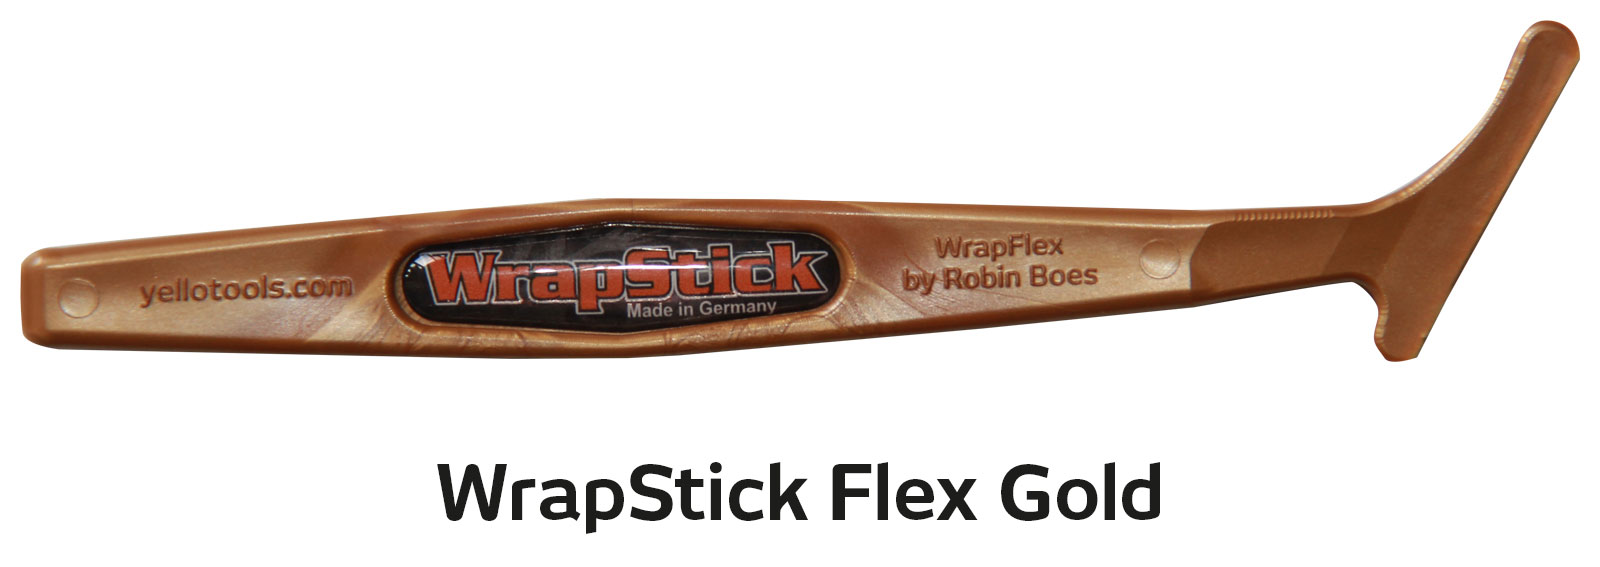 Yellotools WrapStick Flex  Mini squeegee with flexible tool tip